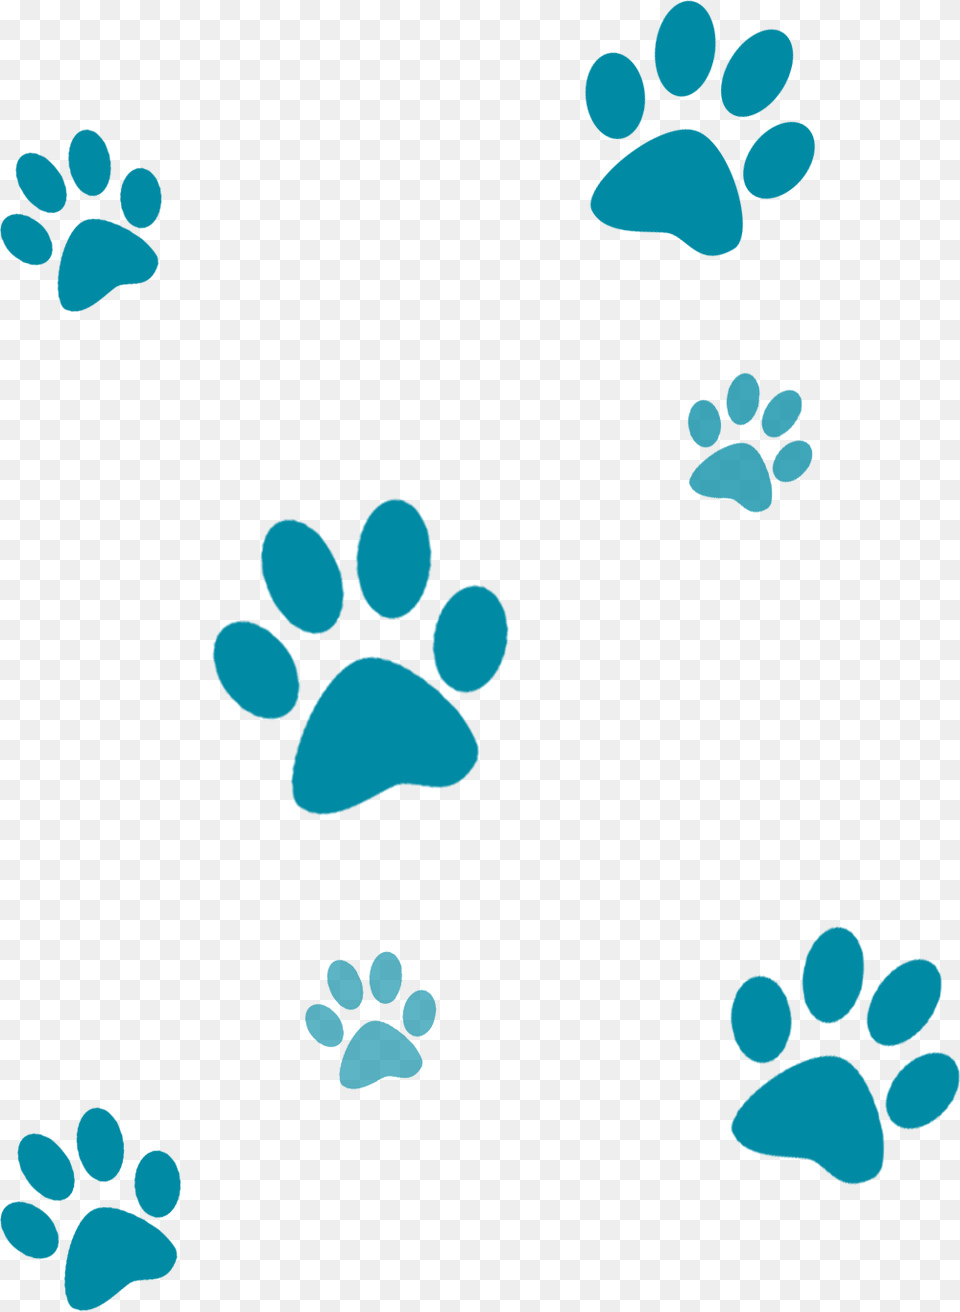 Dog Paw Prints Teal Paw Prints Background Free Transparent Png